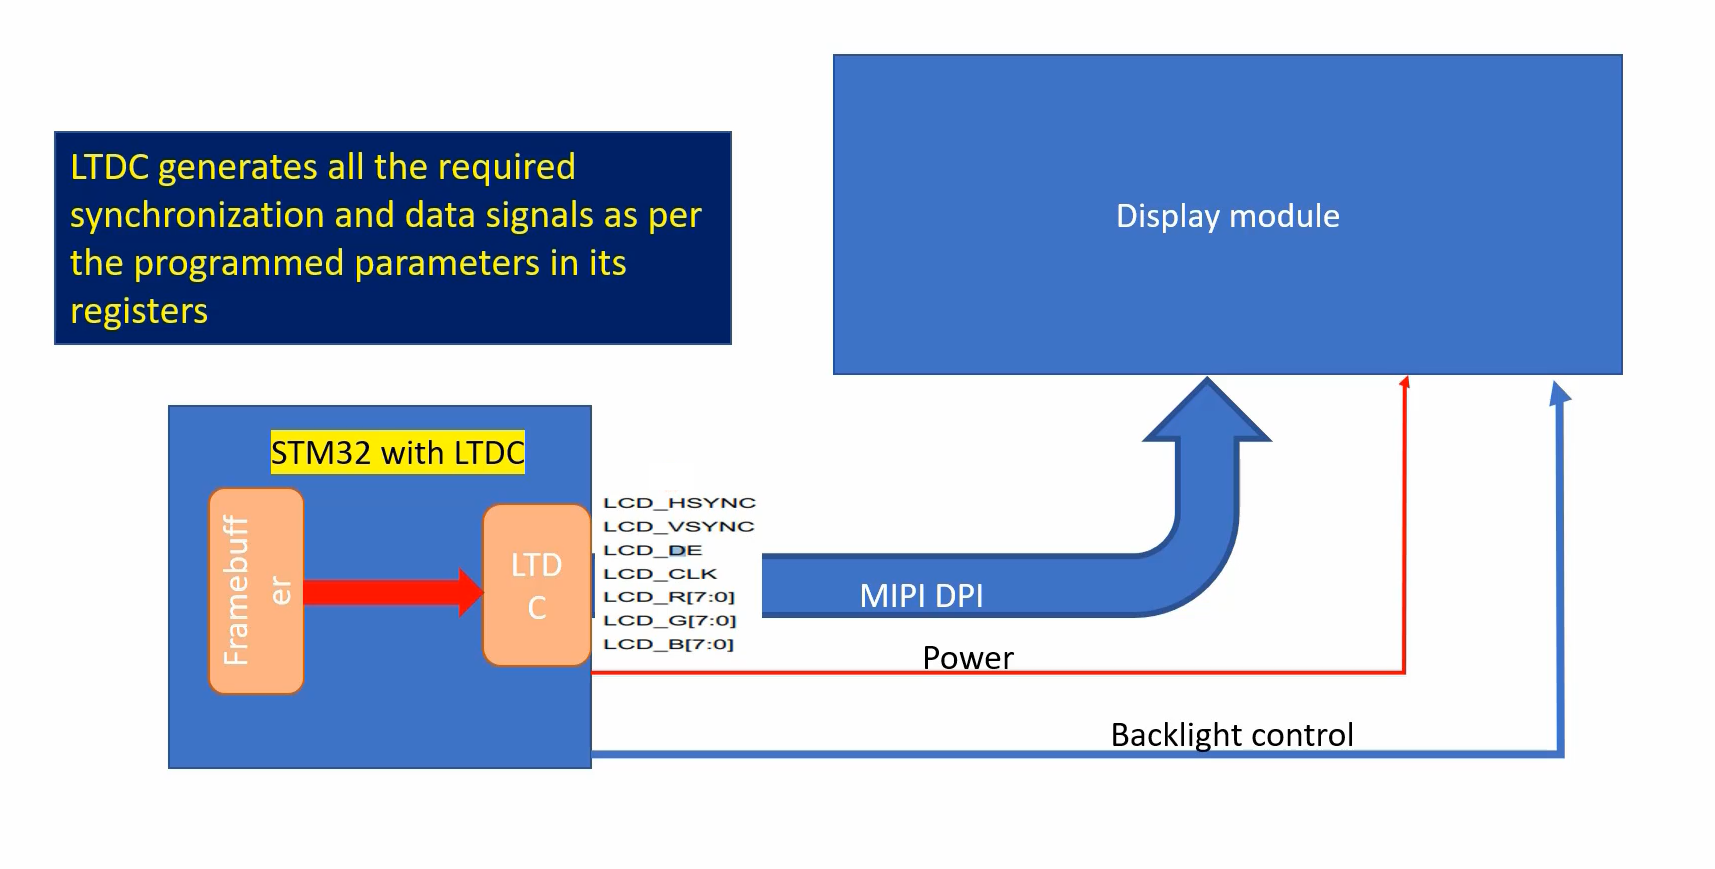 Figure 3. MIPI DPI interface